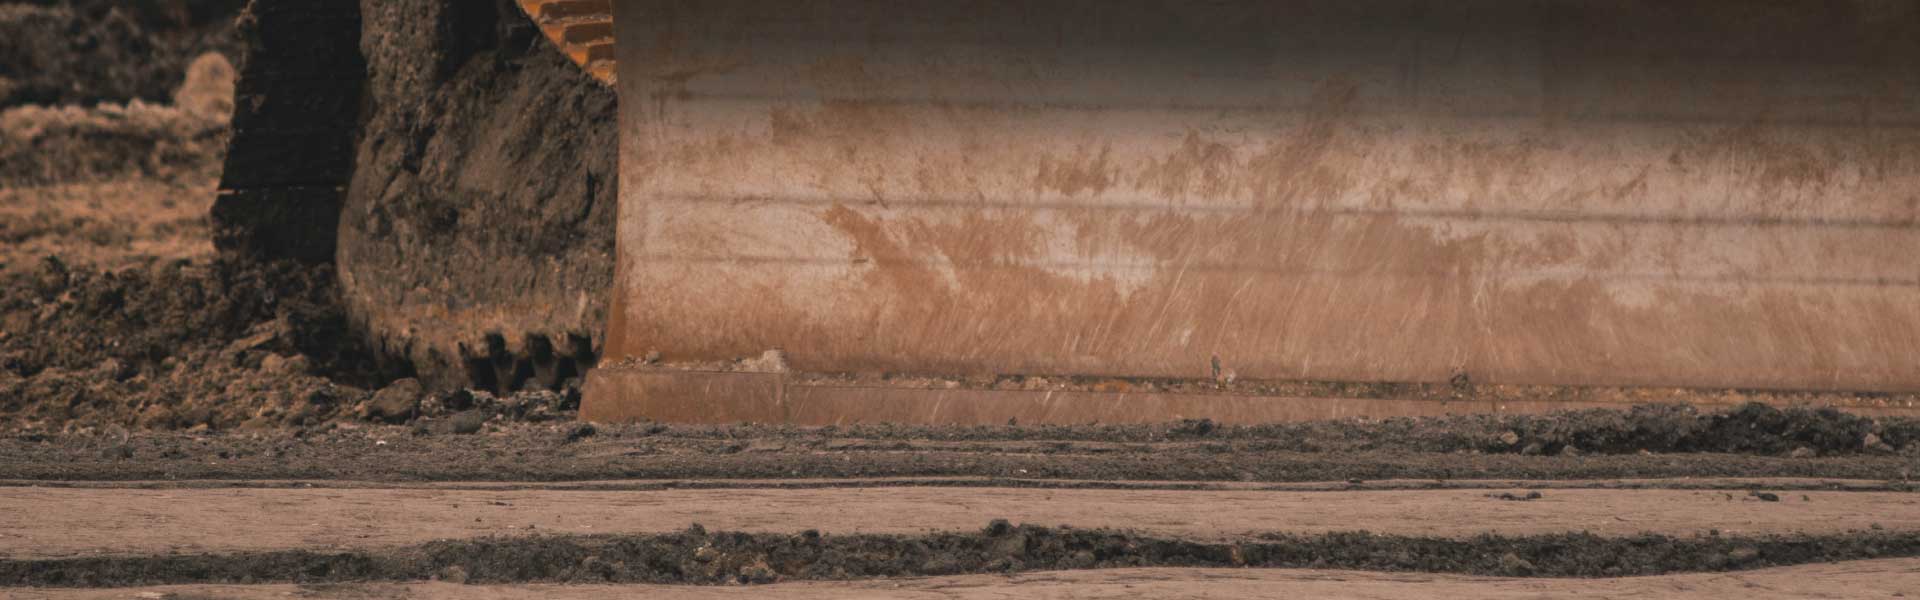 Closer up photo of a bulldozer blade resting on scraped bare dirt. Credit Jason Jarrach.